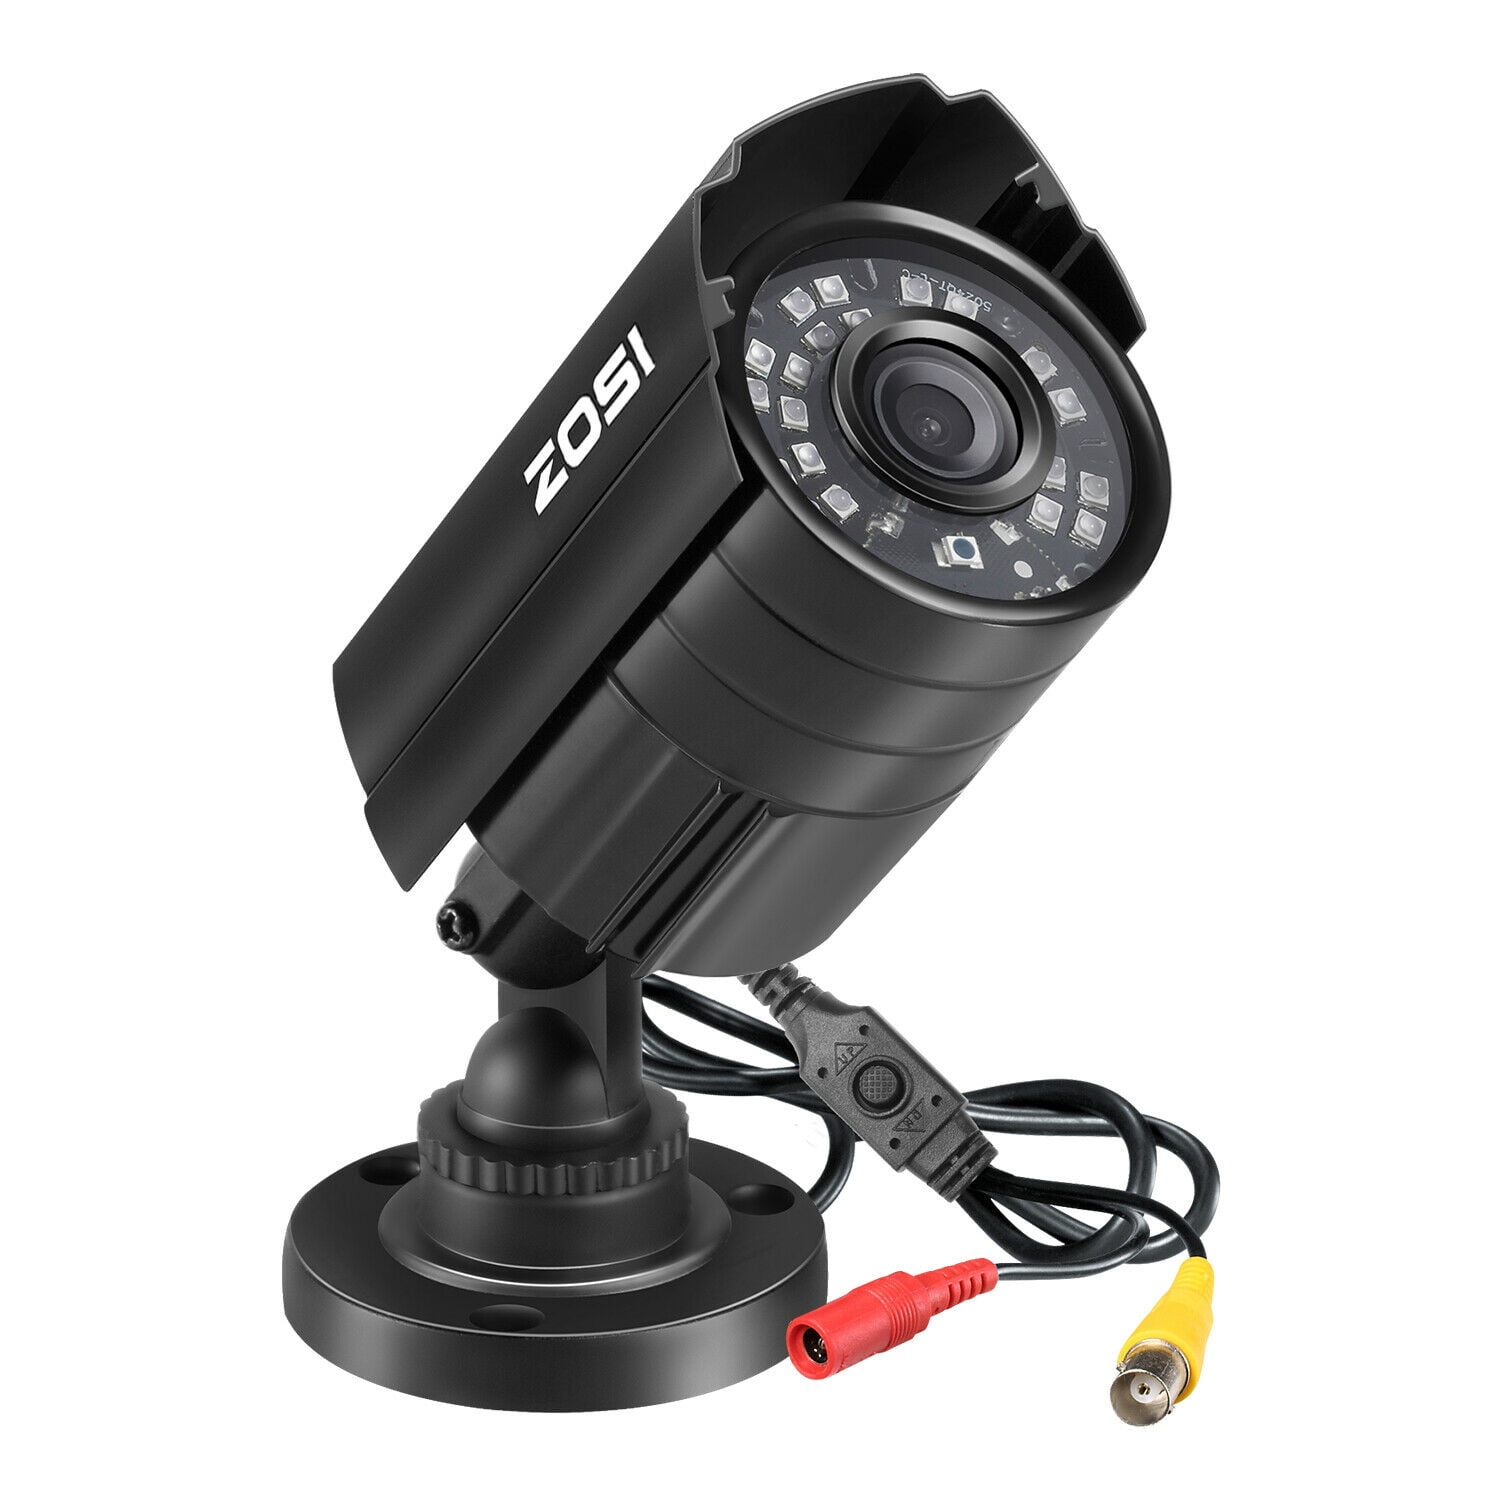 10Pcs CCTV Video Surveillance Security Camera Alarm Sticker Warning Signs HB T^ 